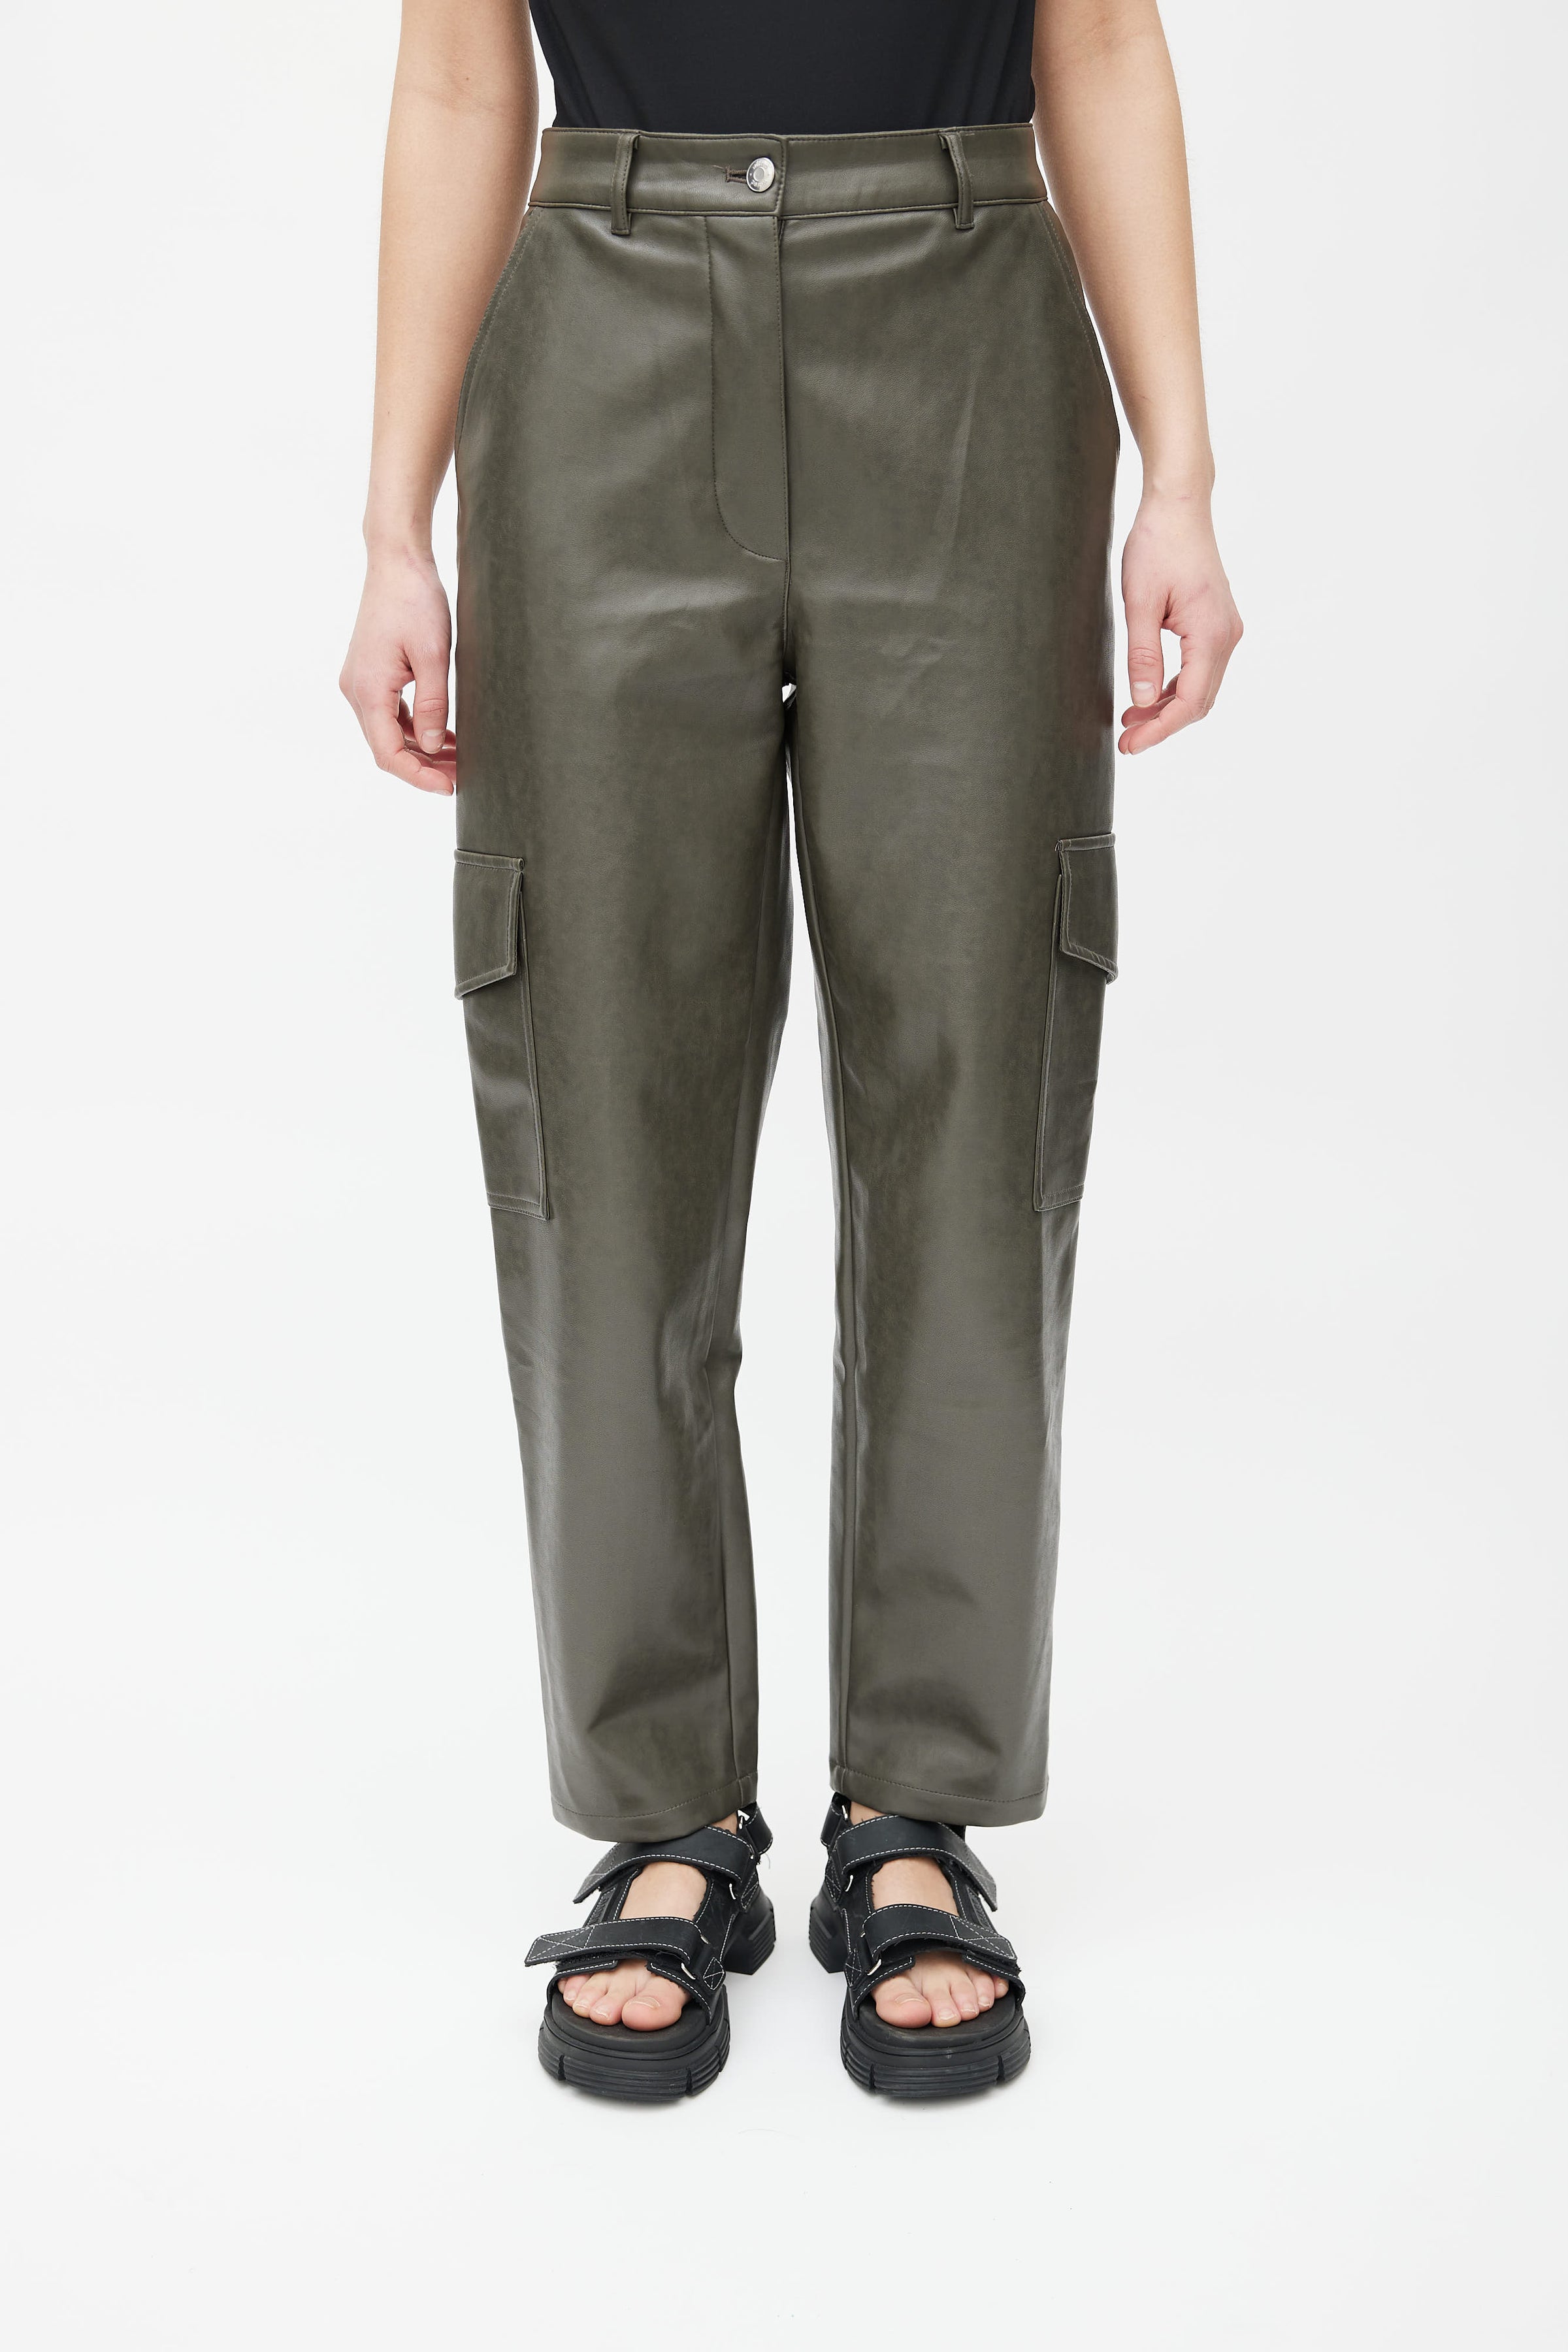 MODERN CARGO PANT | High waisted cargo pants, Flattering pants, Fashion  inspo